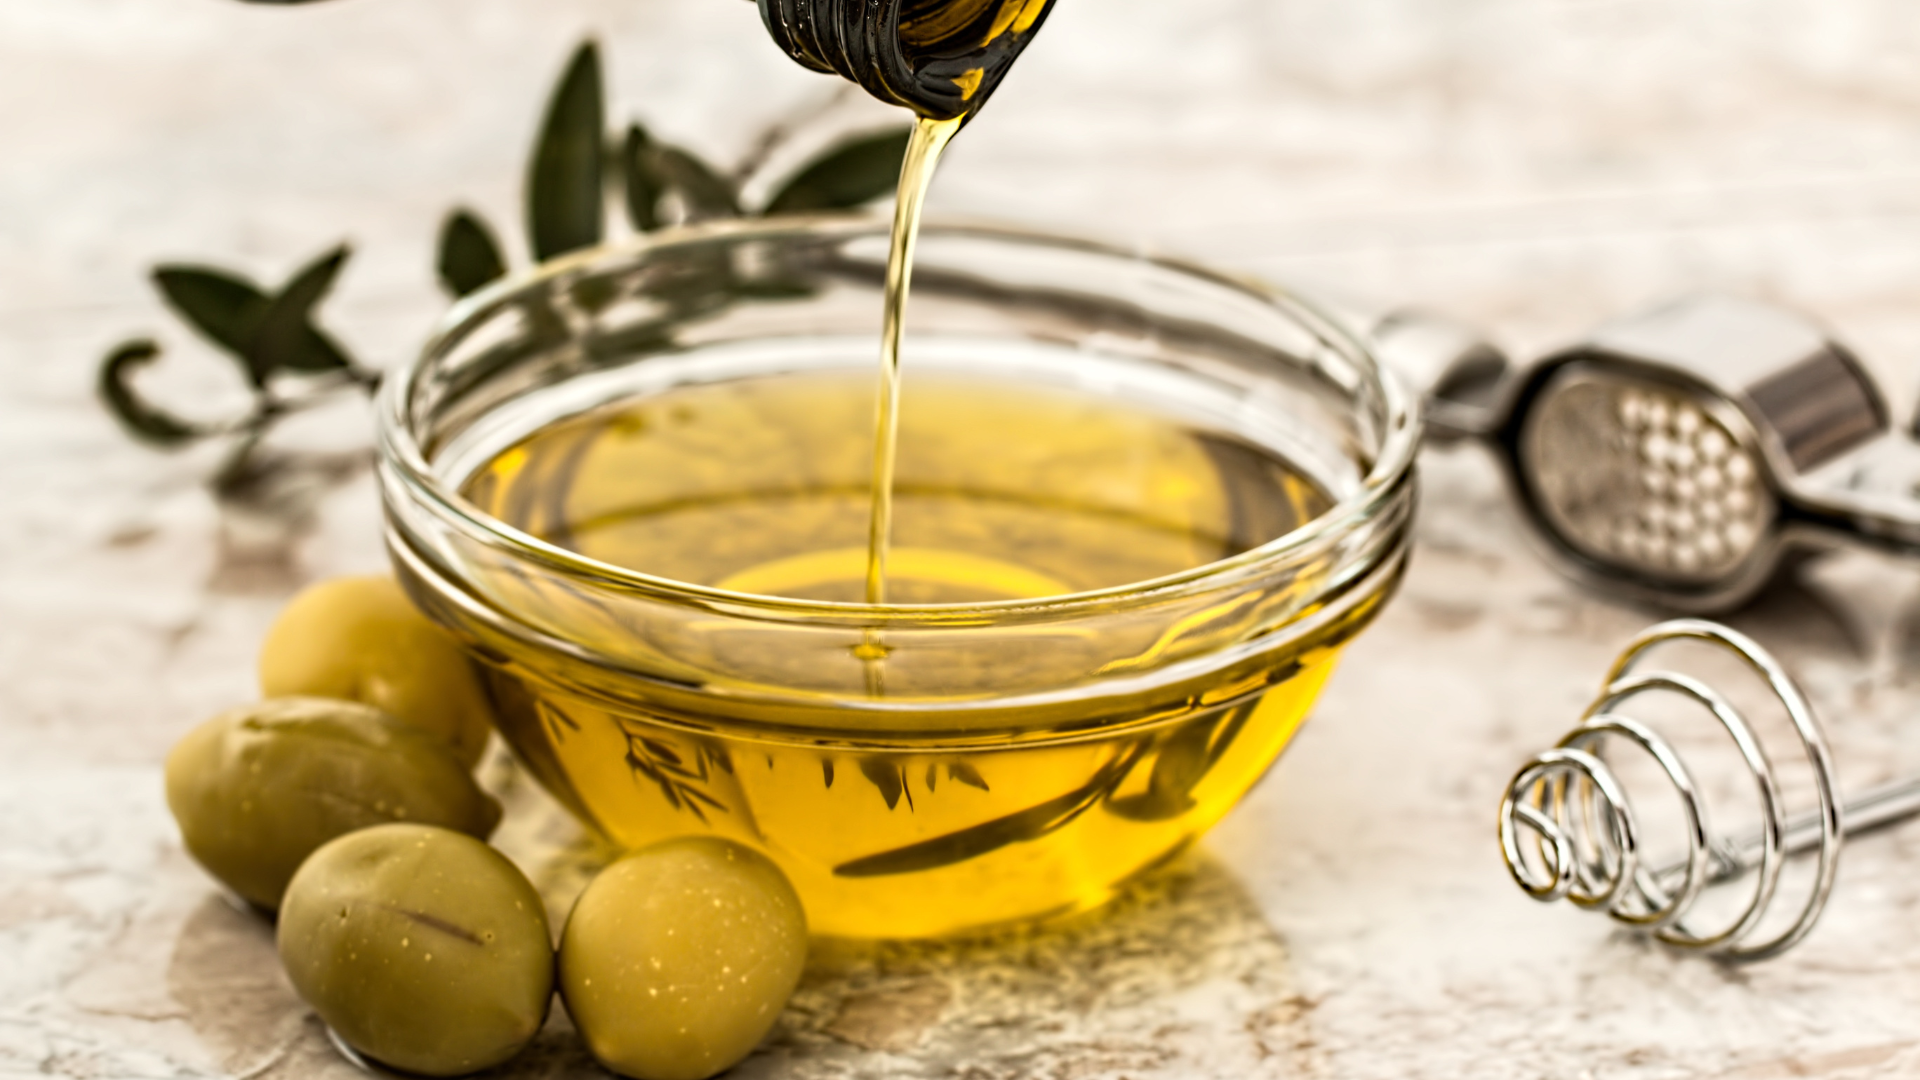 Assemblage et dgustation d'huile d'olive